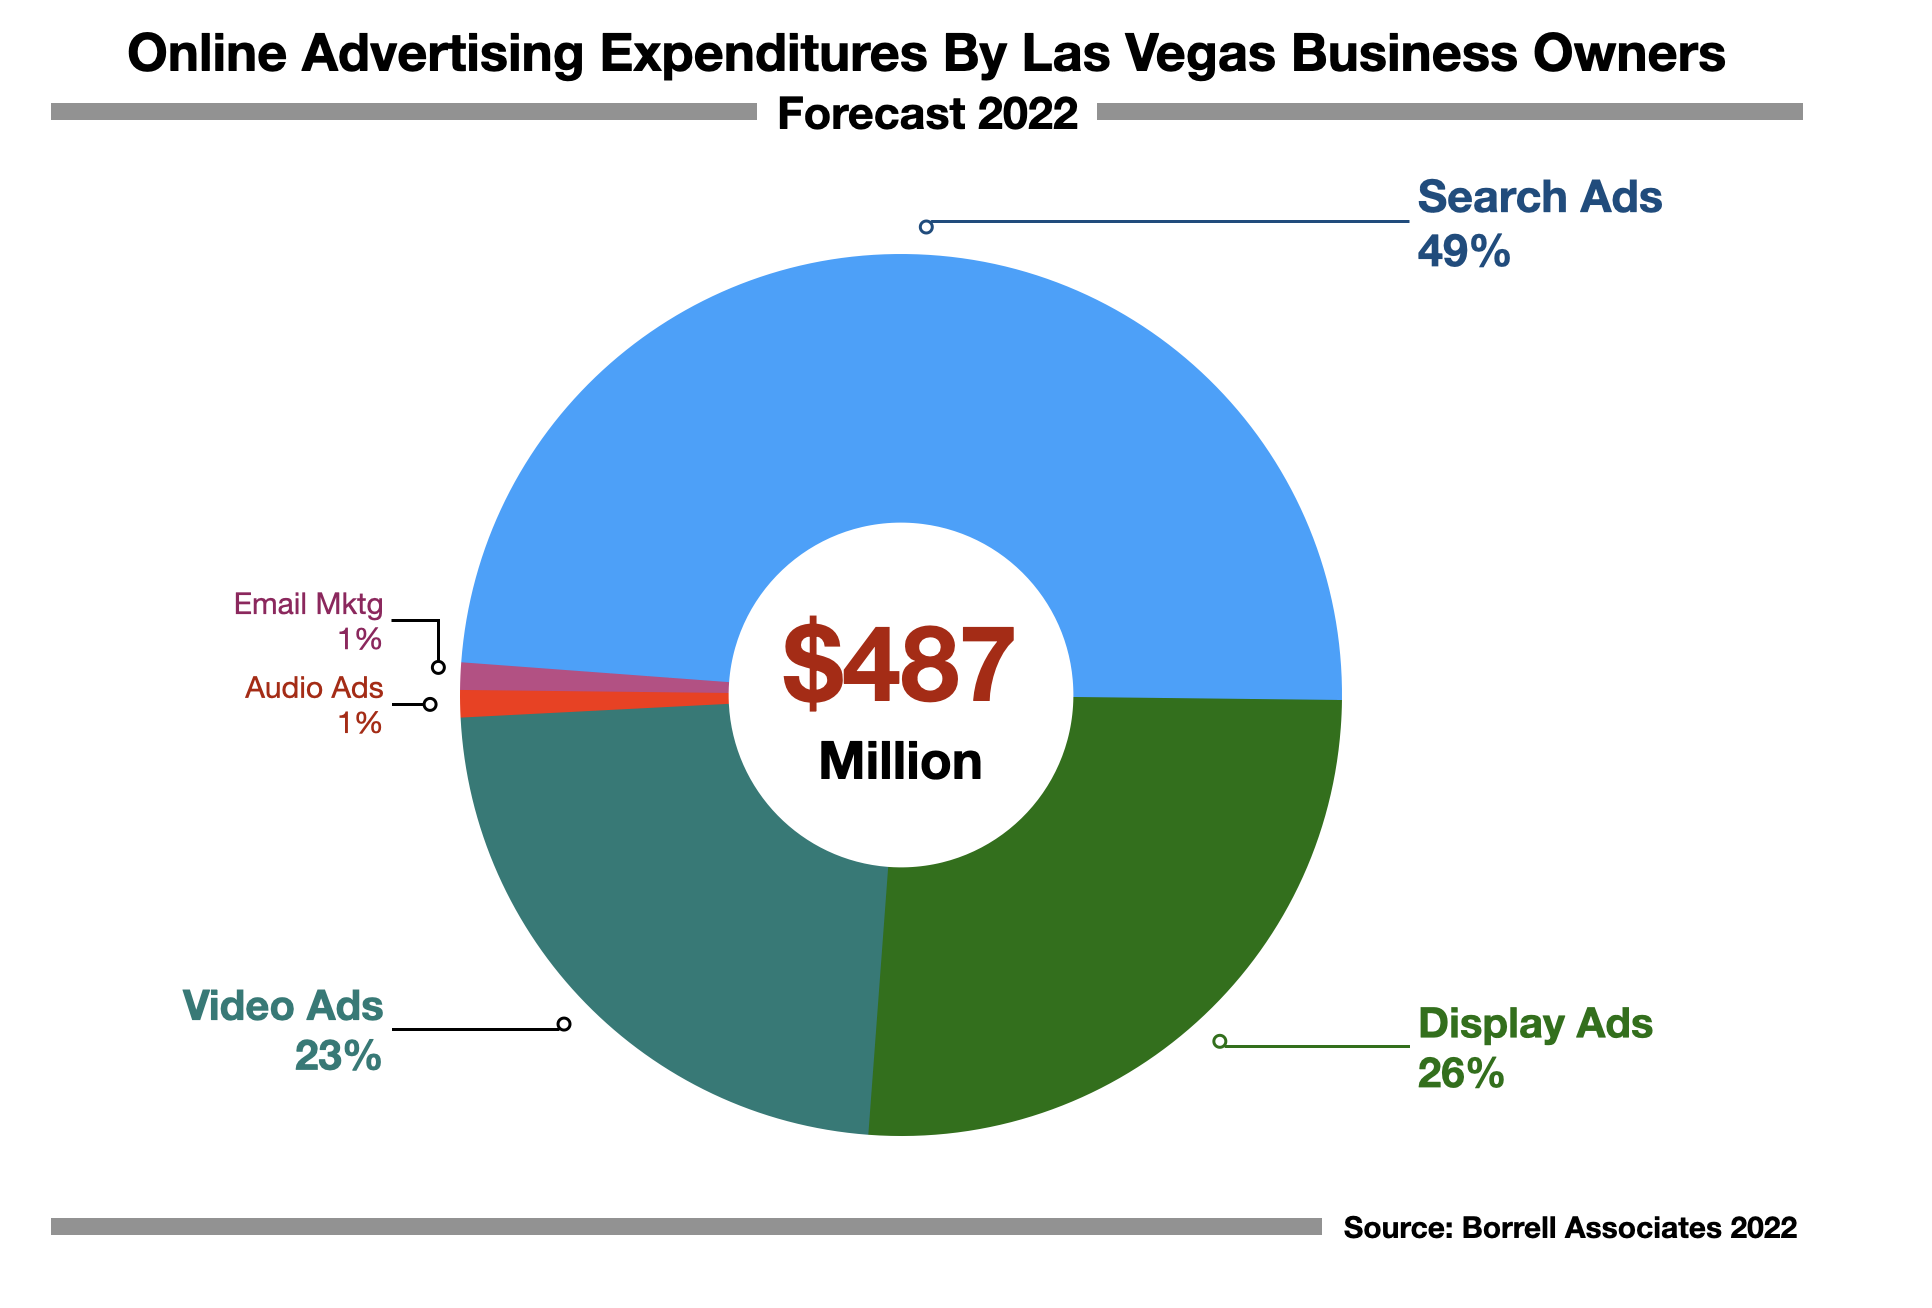 Online Advertising In Las Vegas 2022 Forecast